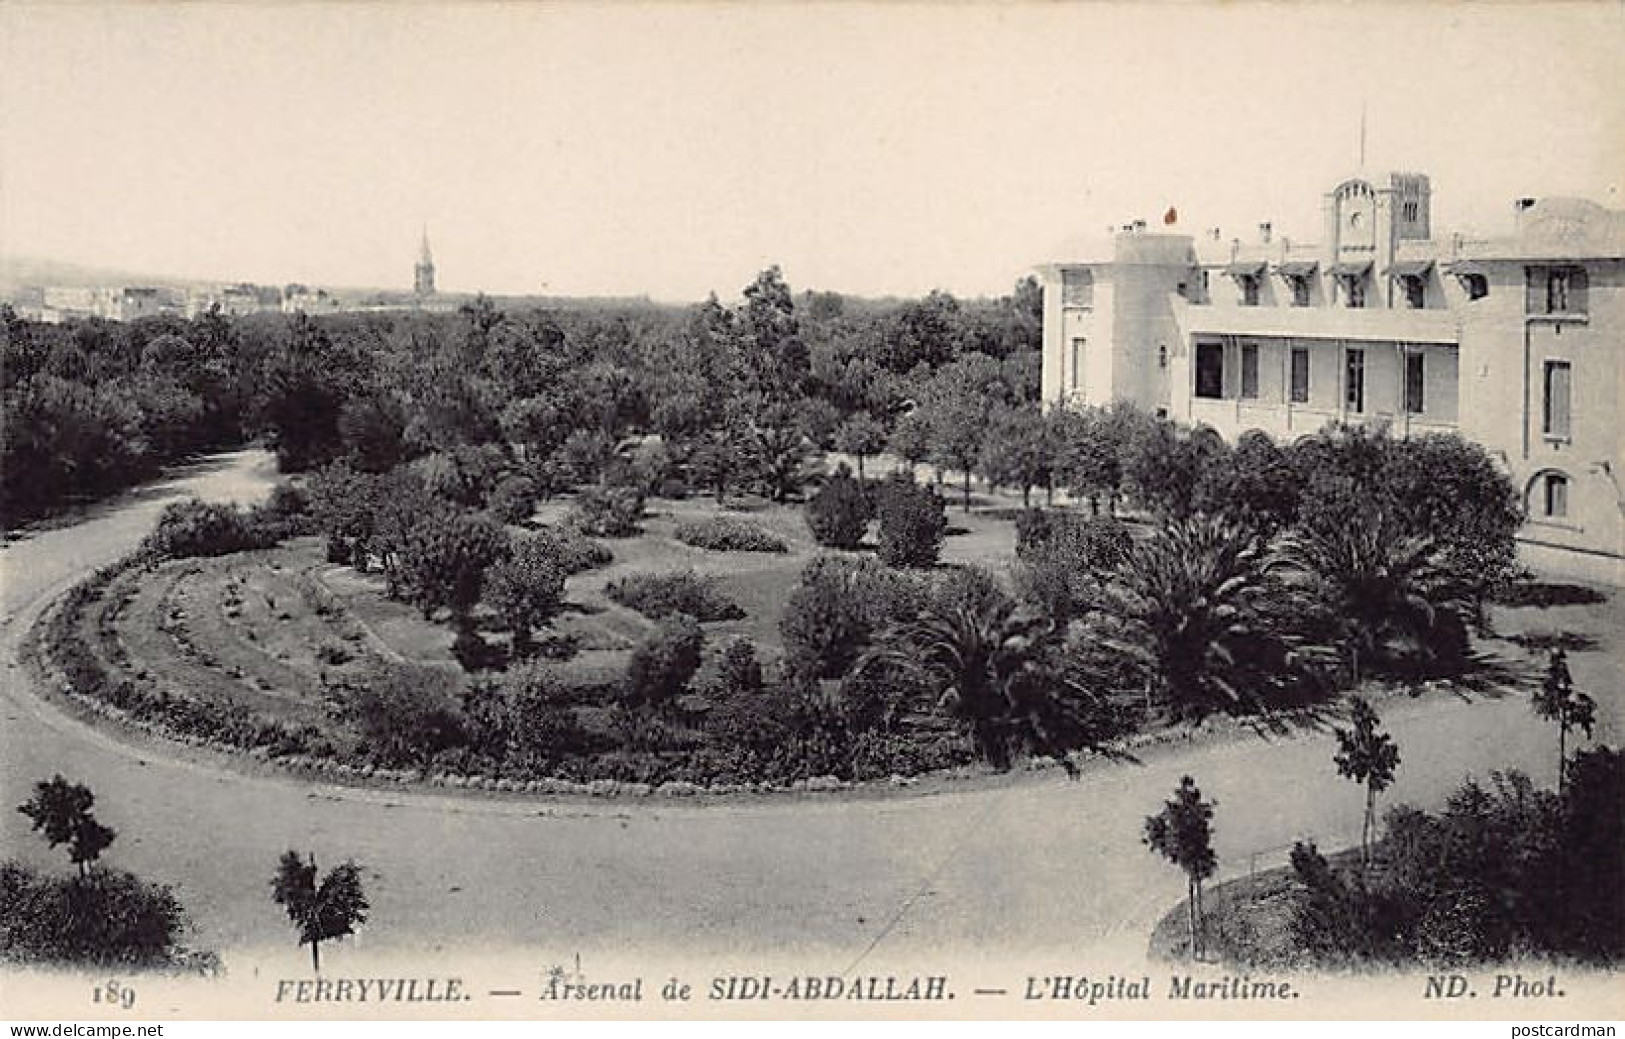 Tunisie - FERRYVILLE Menzel Bourguiba - Arsenal De Sidi-Abdallah - L'hôpital Maritime - Ed. Neurdein ND Phot. 189 - Tunisia